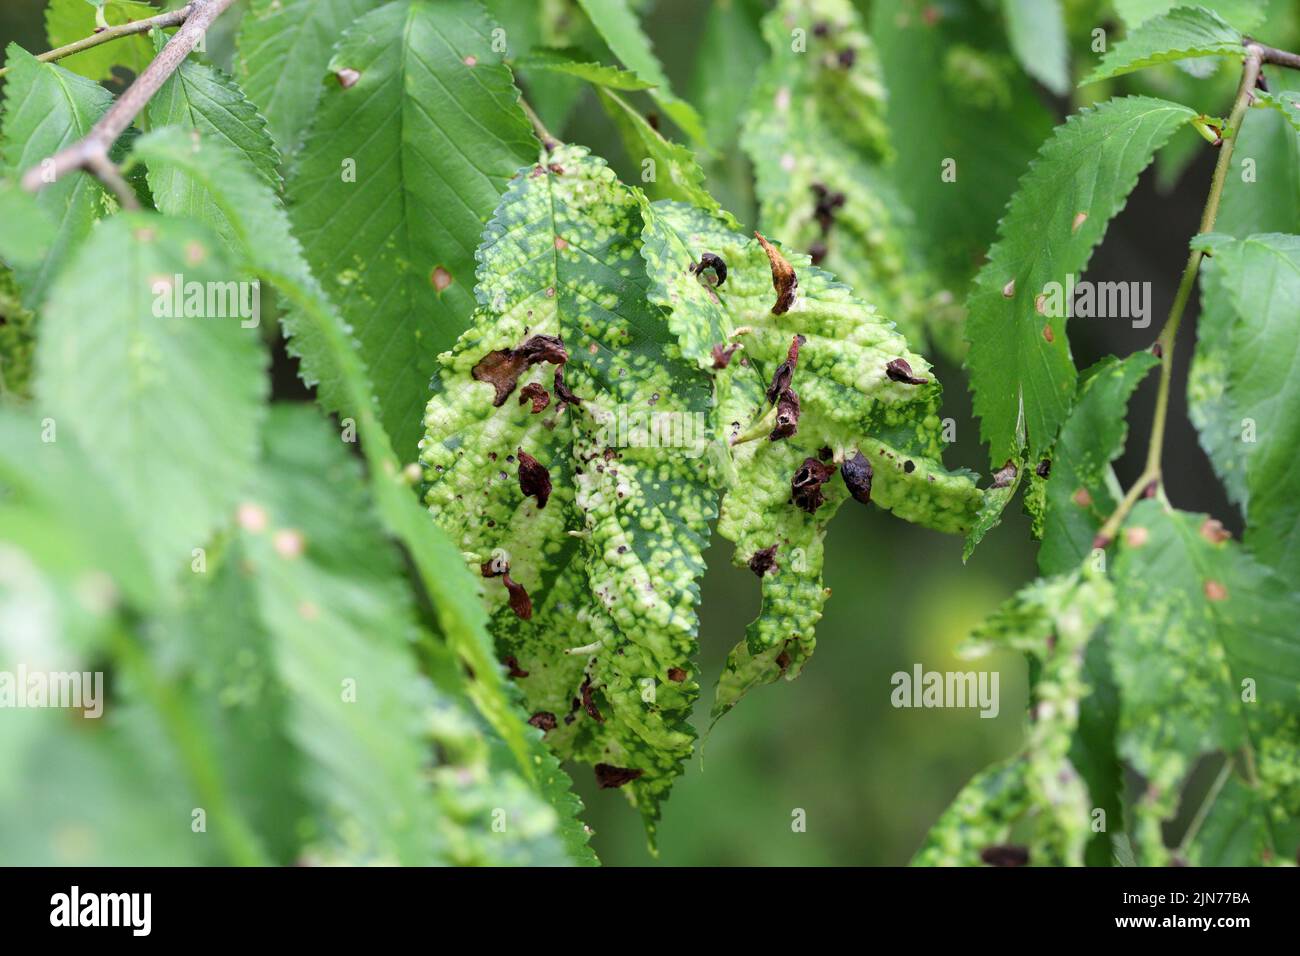 Gall of Elm-grass aphid or Elm sack gall aphid (Tetraneura ulmi) on green leaf of Ulmus glabra or Wych elm. Stock Photo